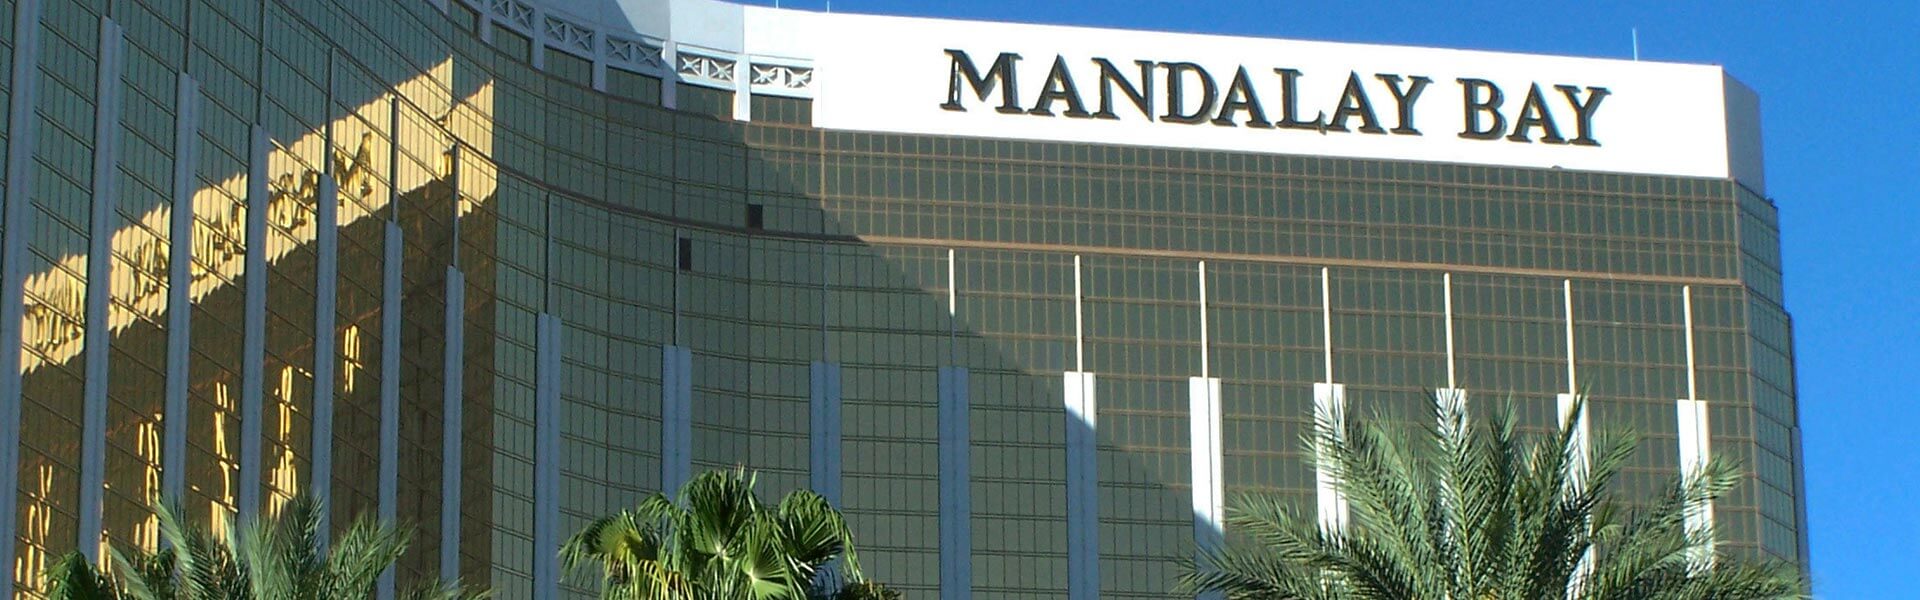 Mandalay Bay Las Vegas Attractions Big Bus Tours